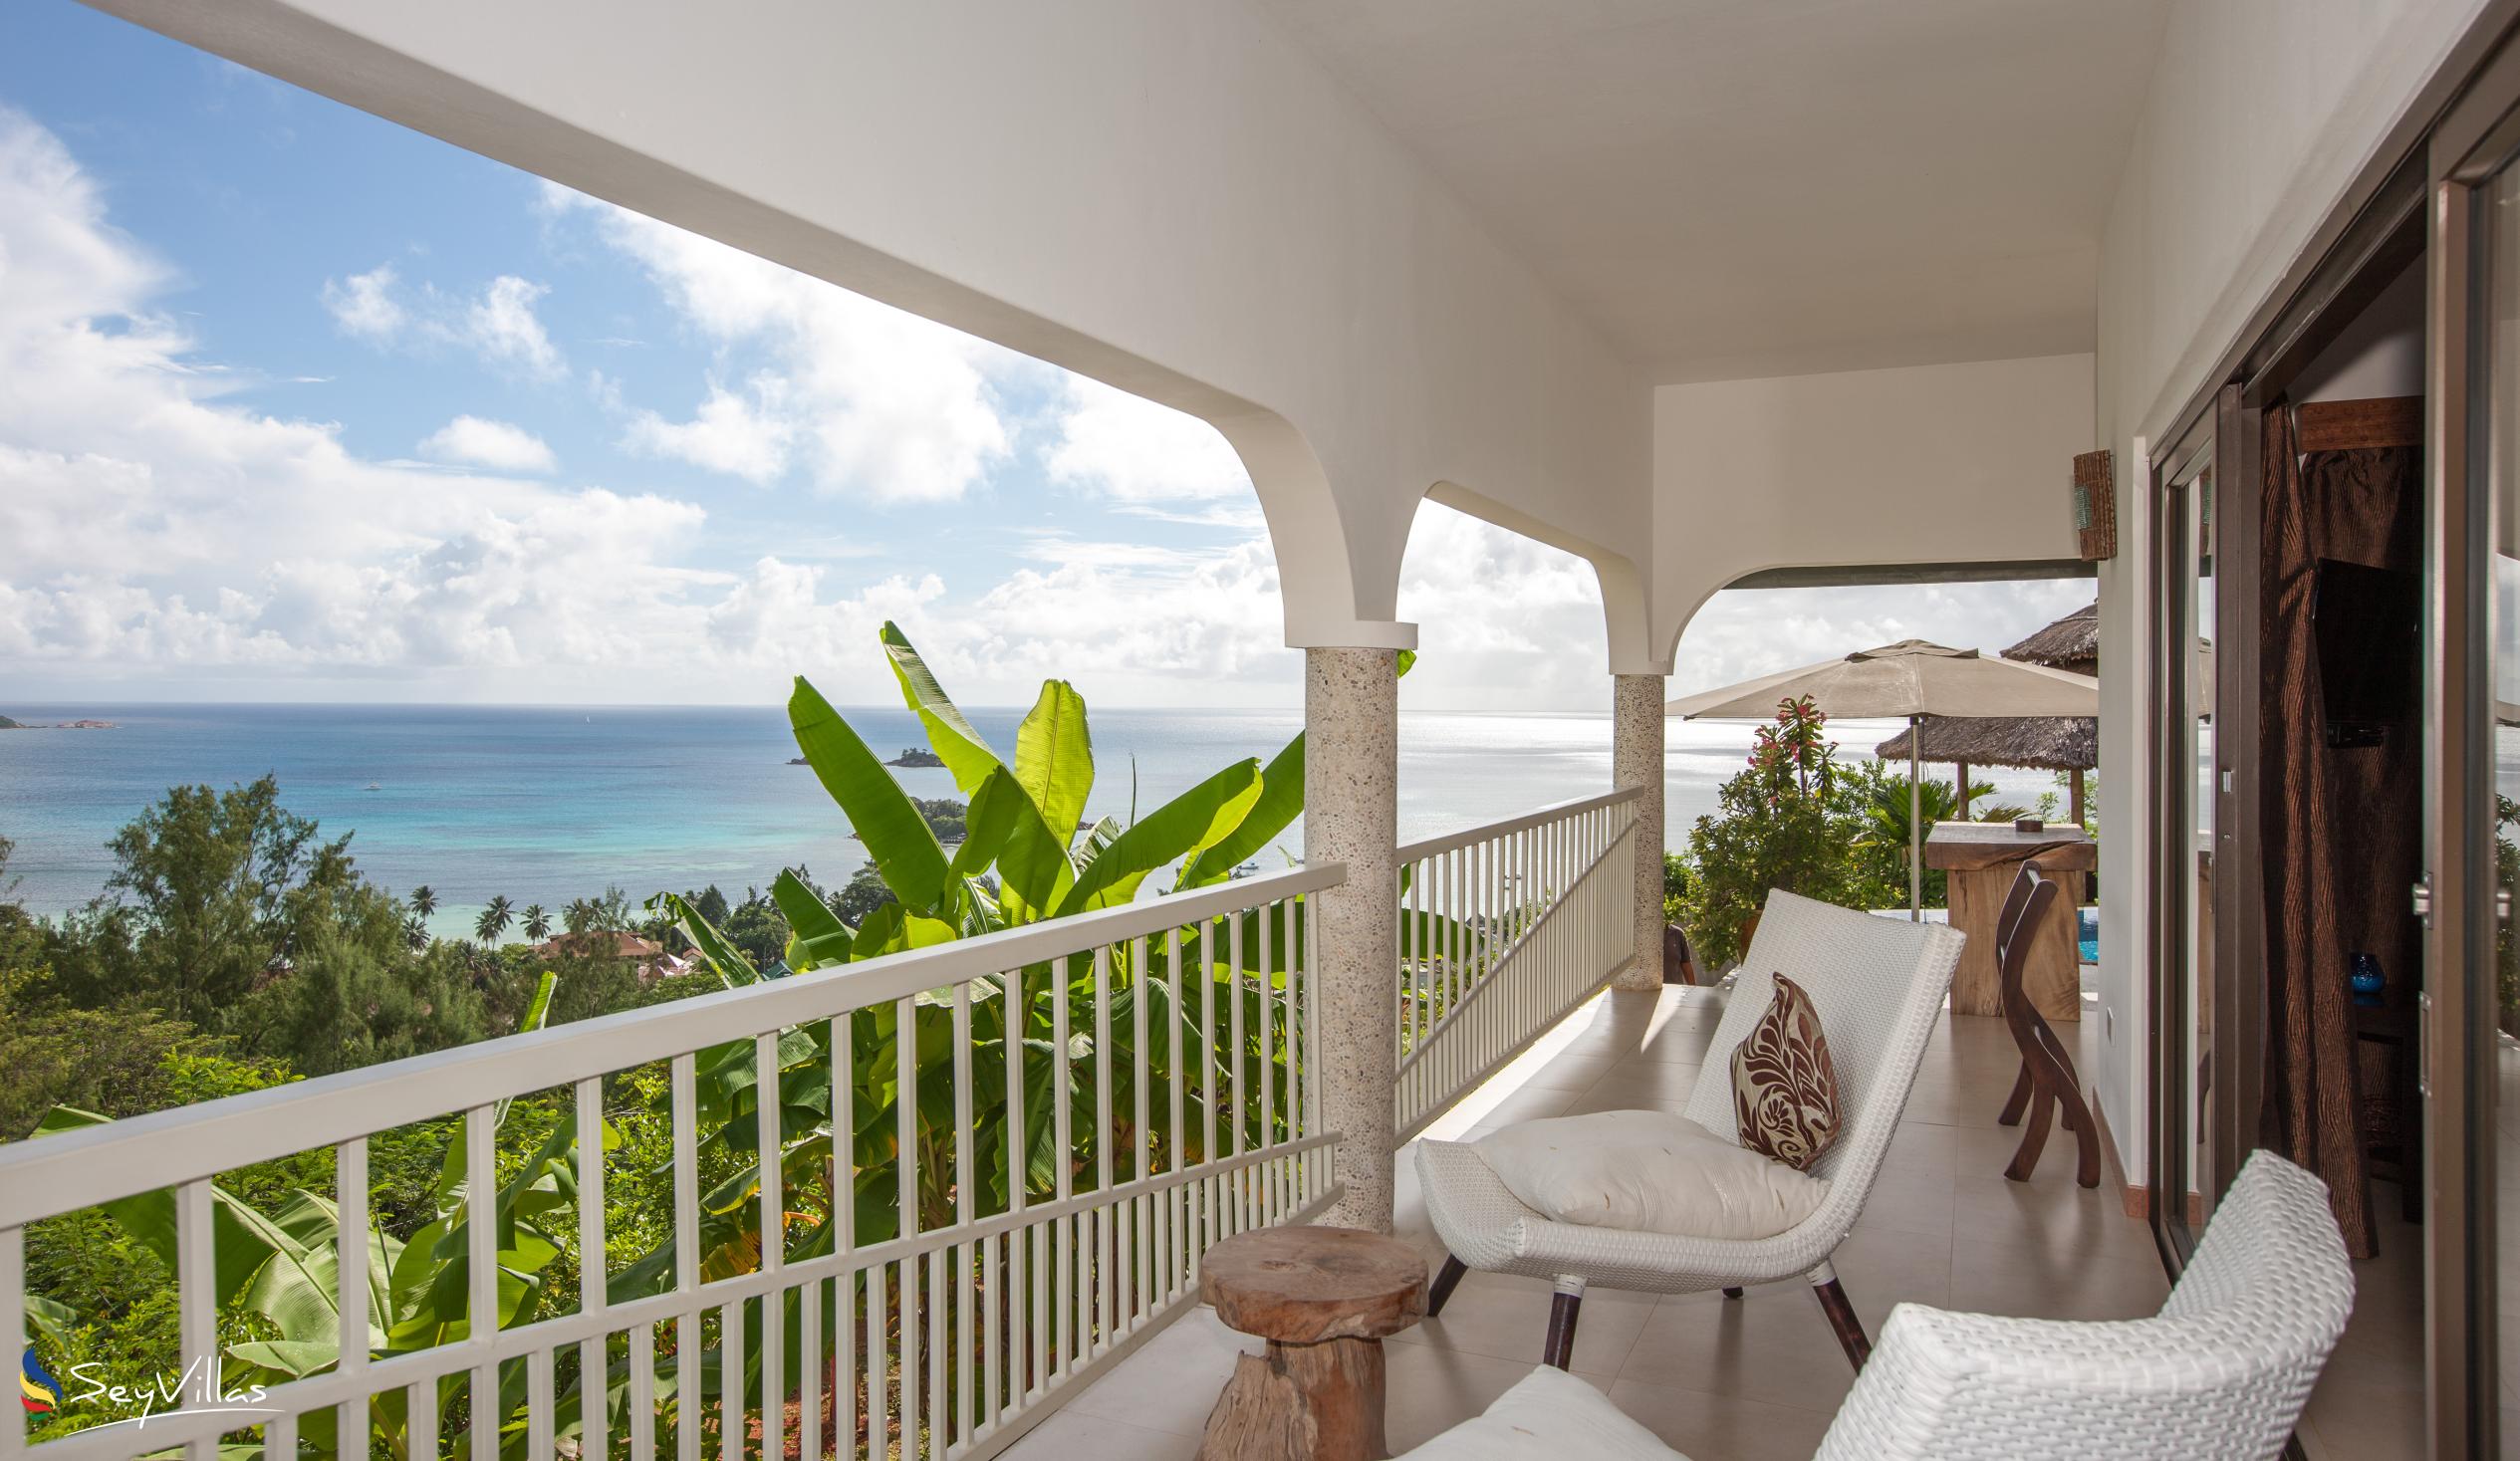 Foto 55: Le Duc de Praslin Hillside Villas - Villa 270° - Praslin (Seychellen)